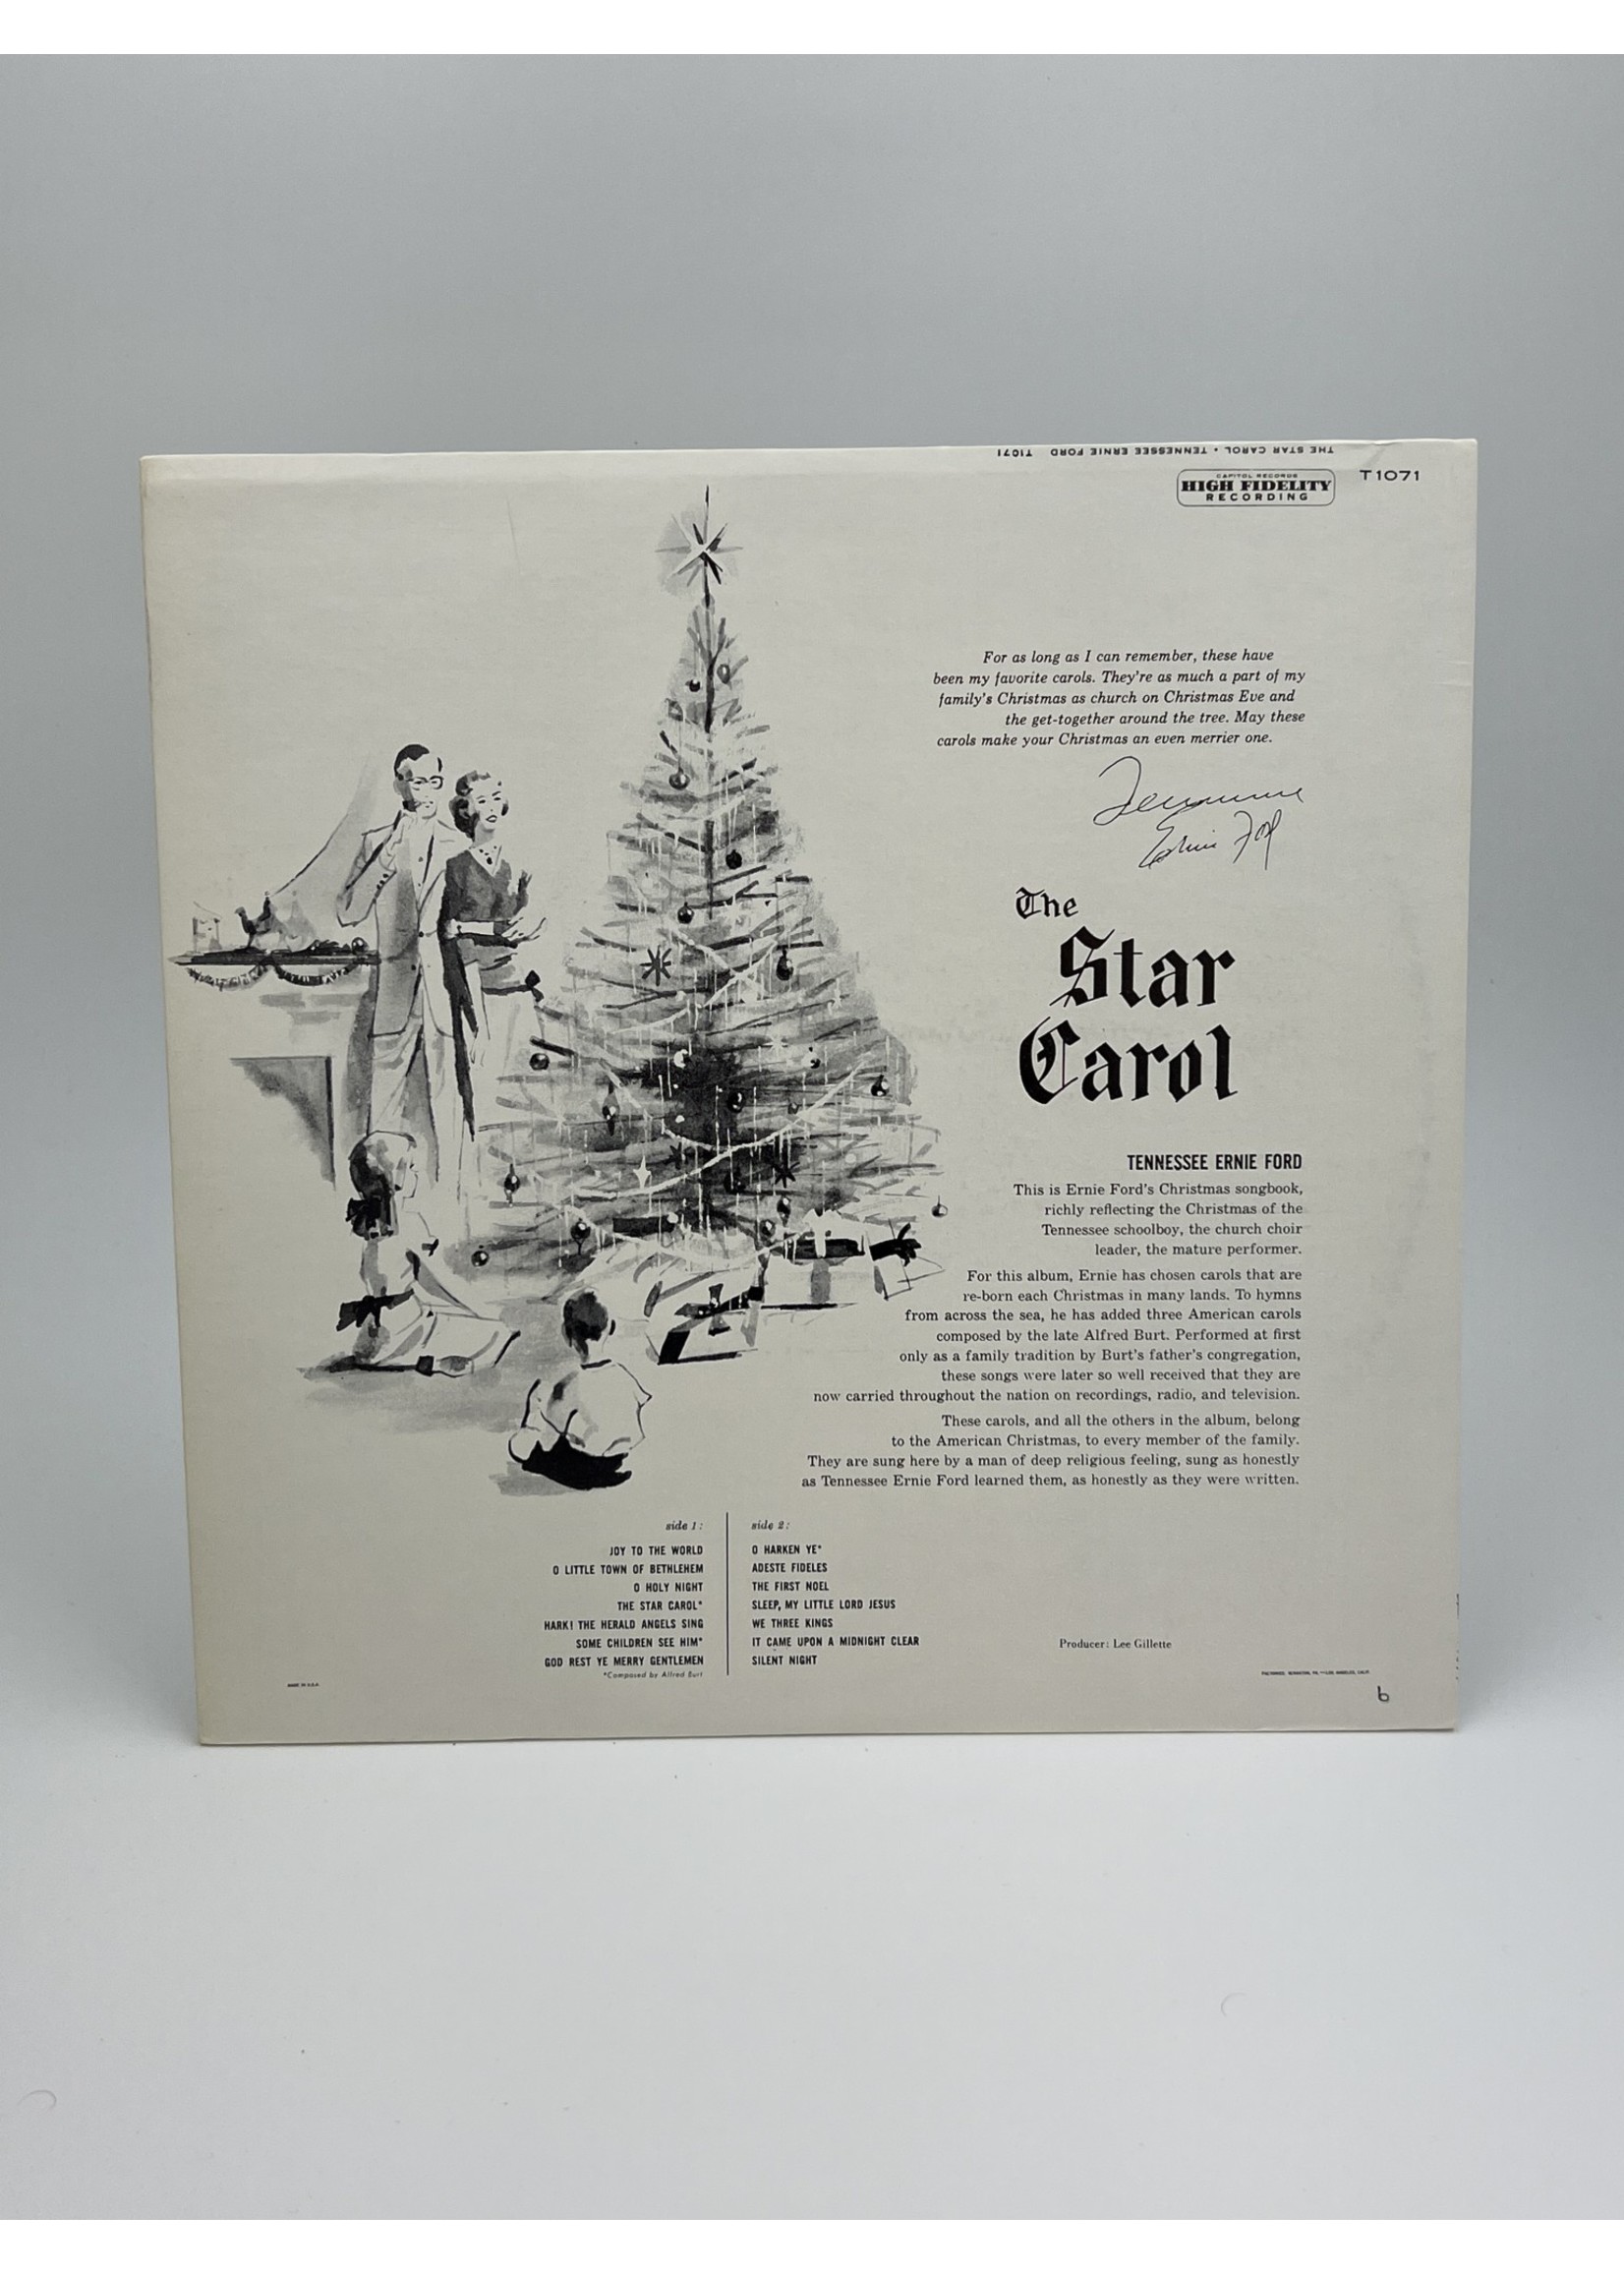 LP Tennessee Ernie Ford The Star Carol LP Record